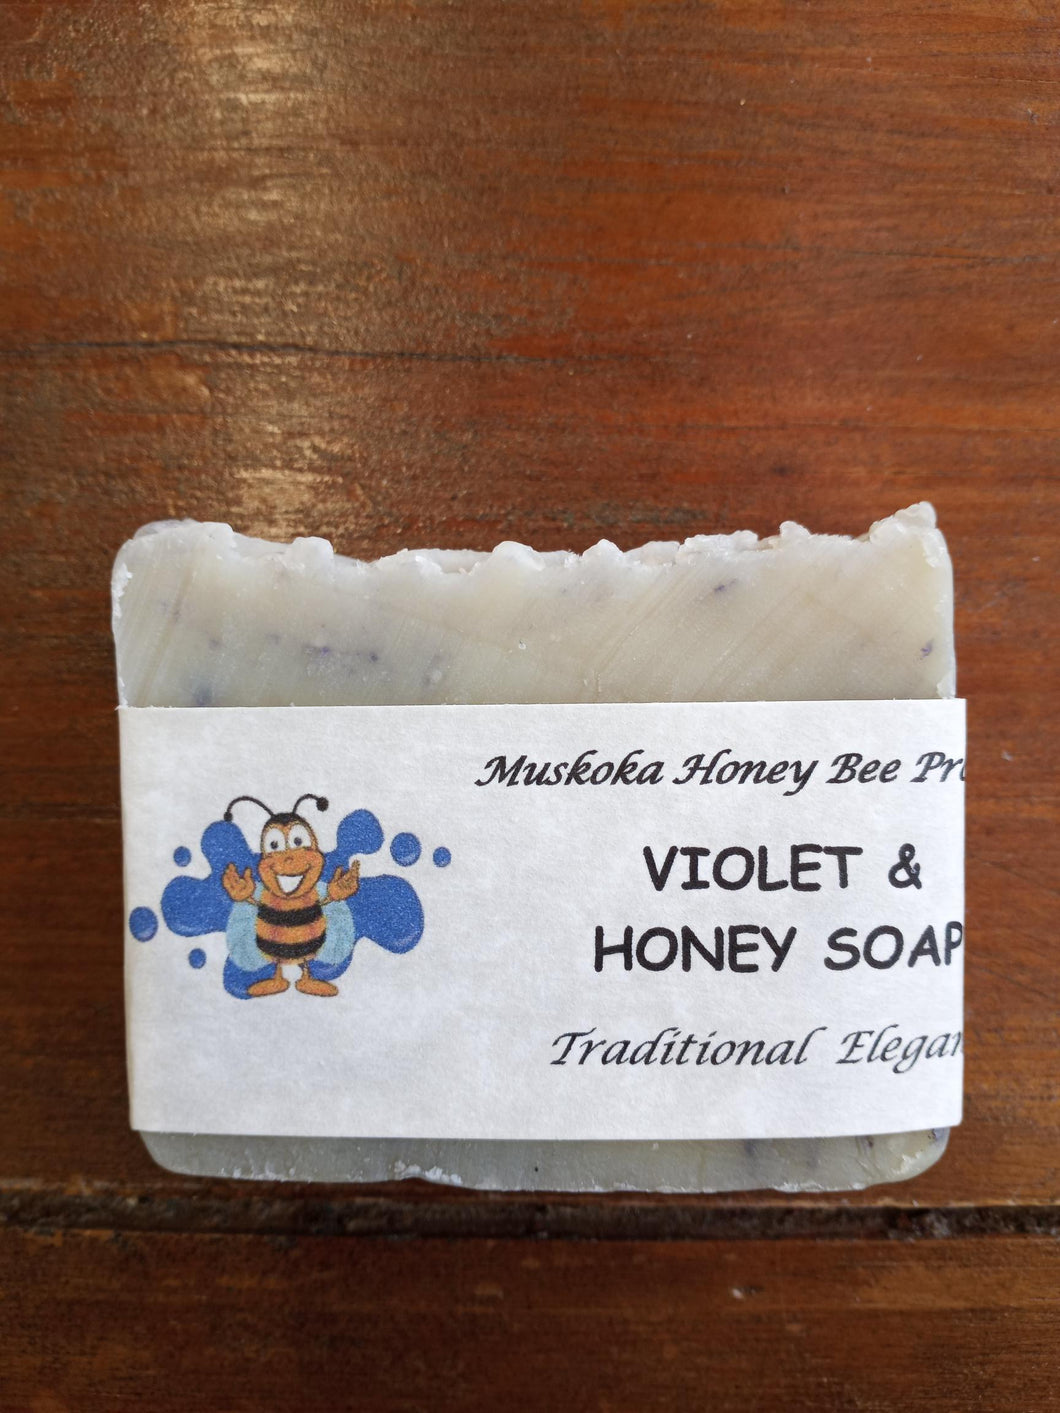 Violet & Honey Soap